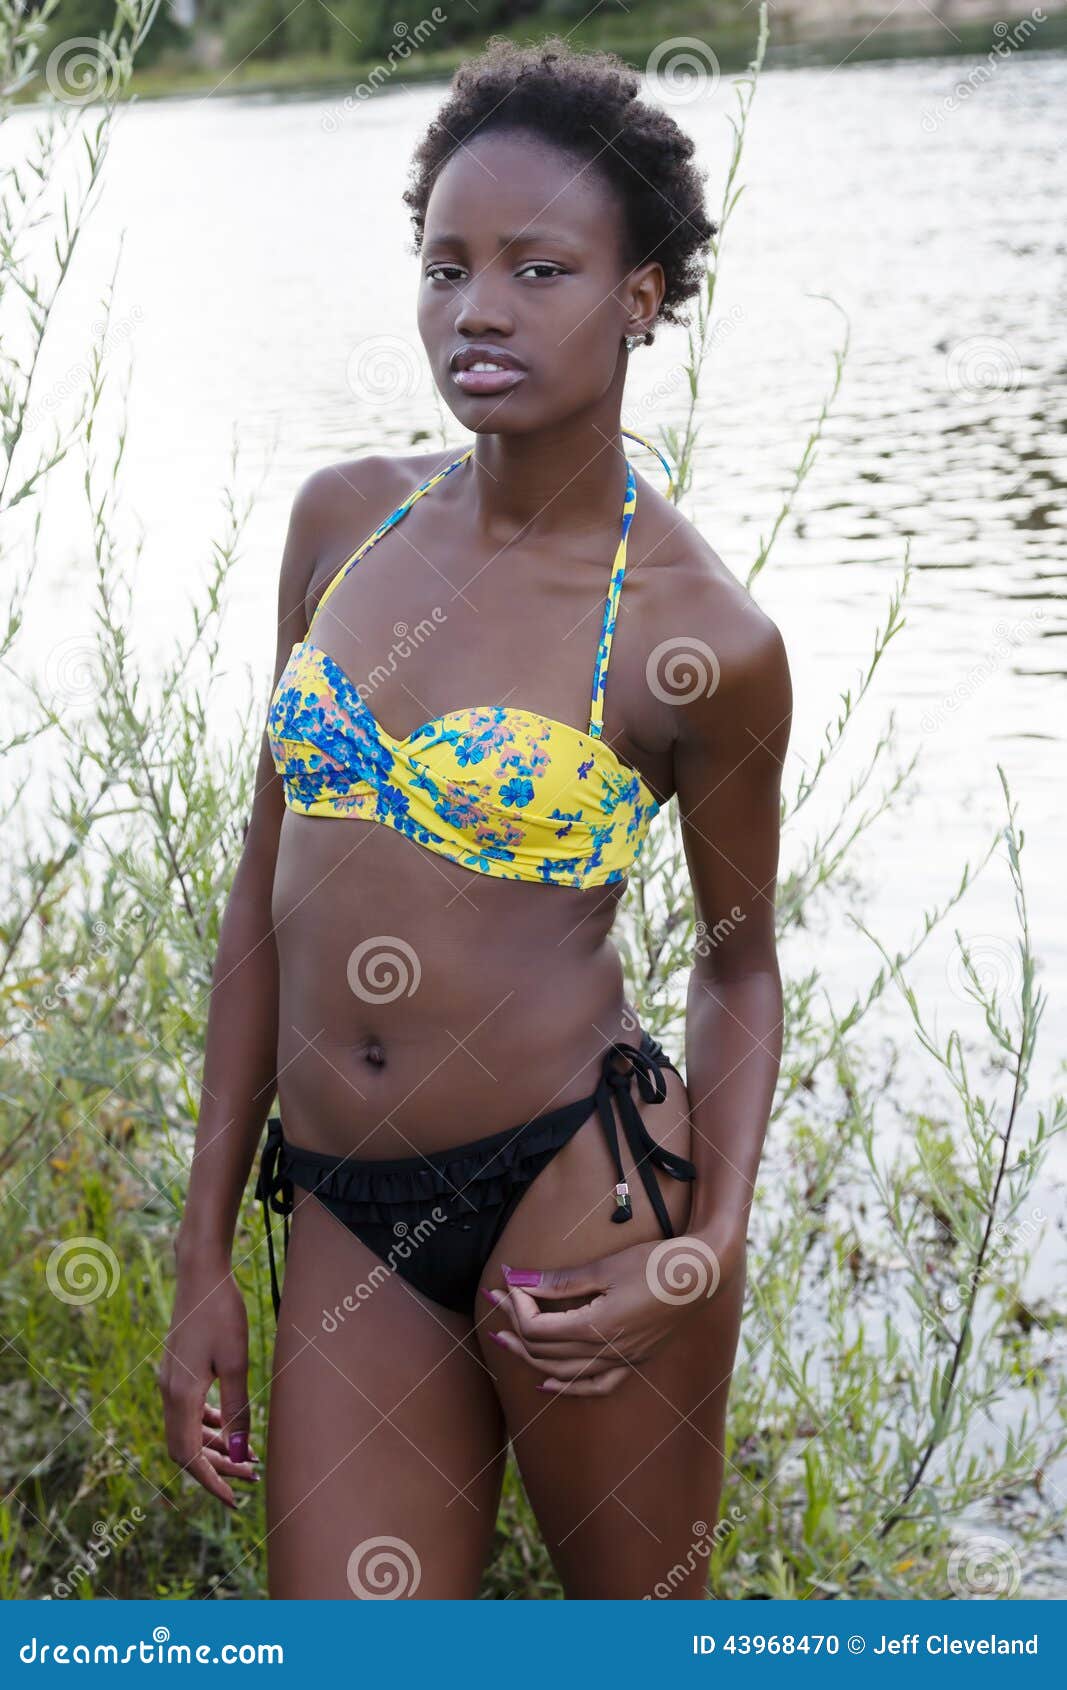 534 Teen Girl Swim Suit Stock Photos - Free & Royalty-Free Stock